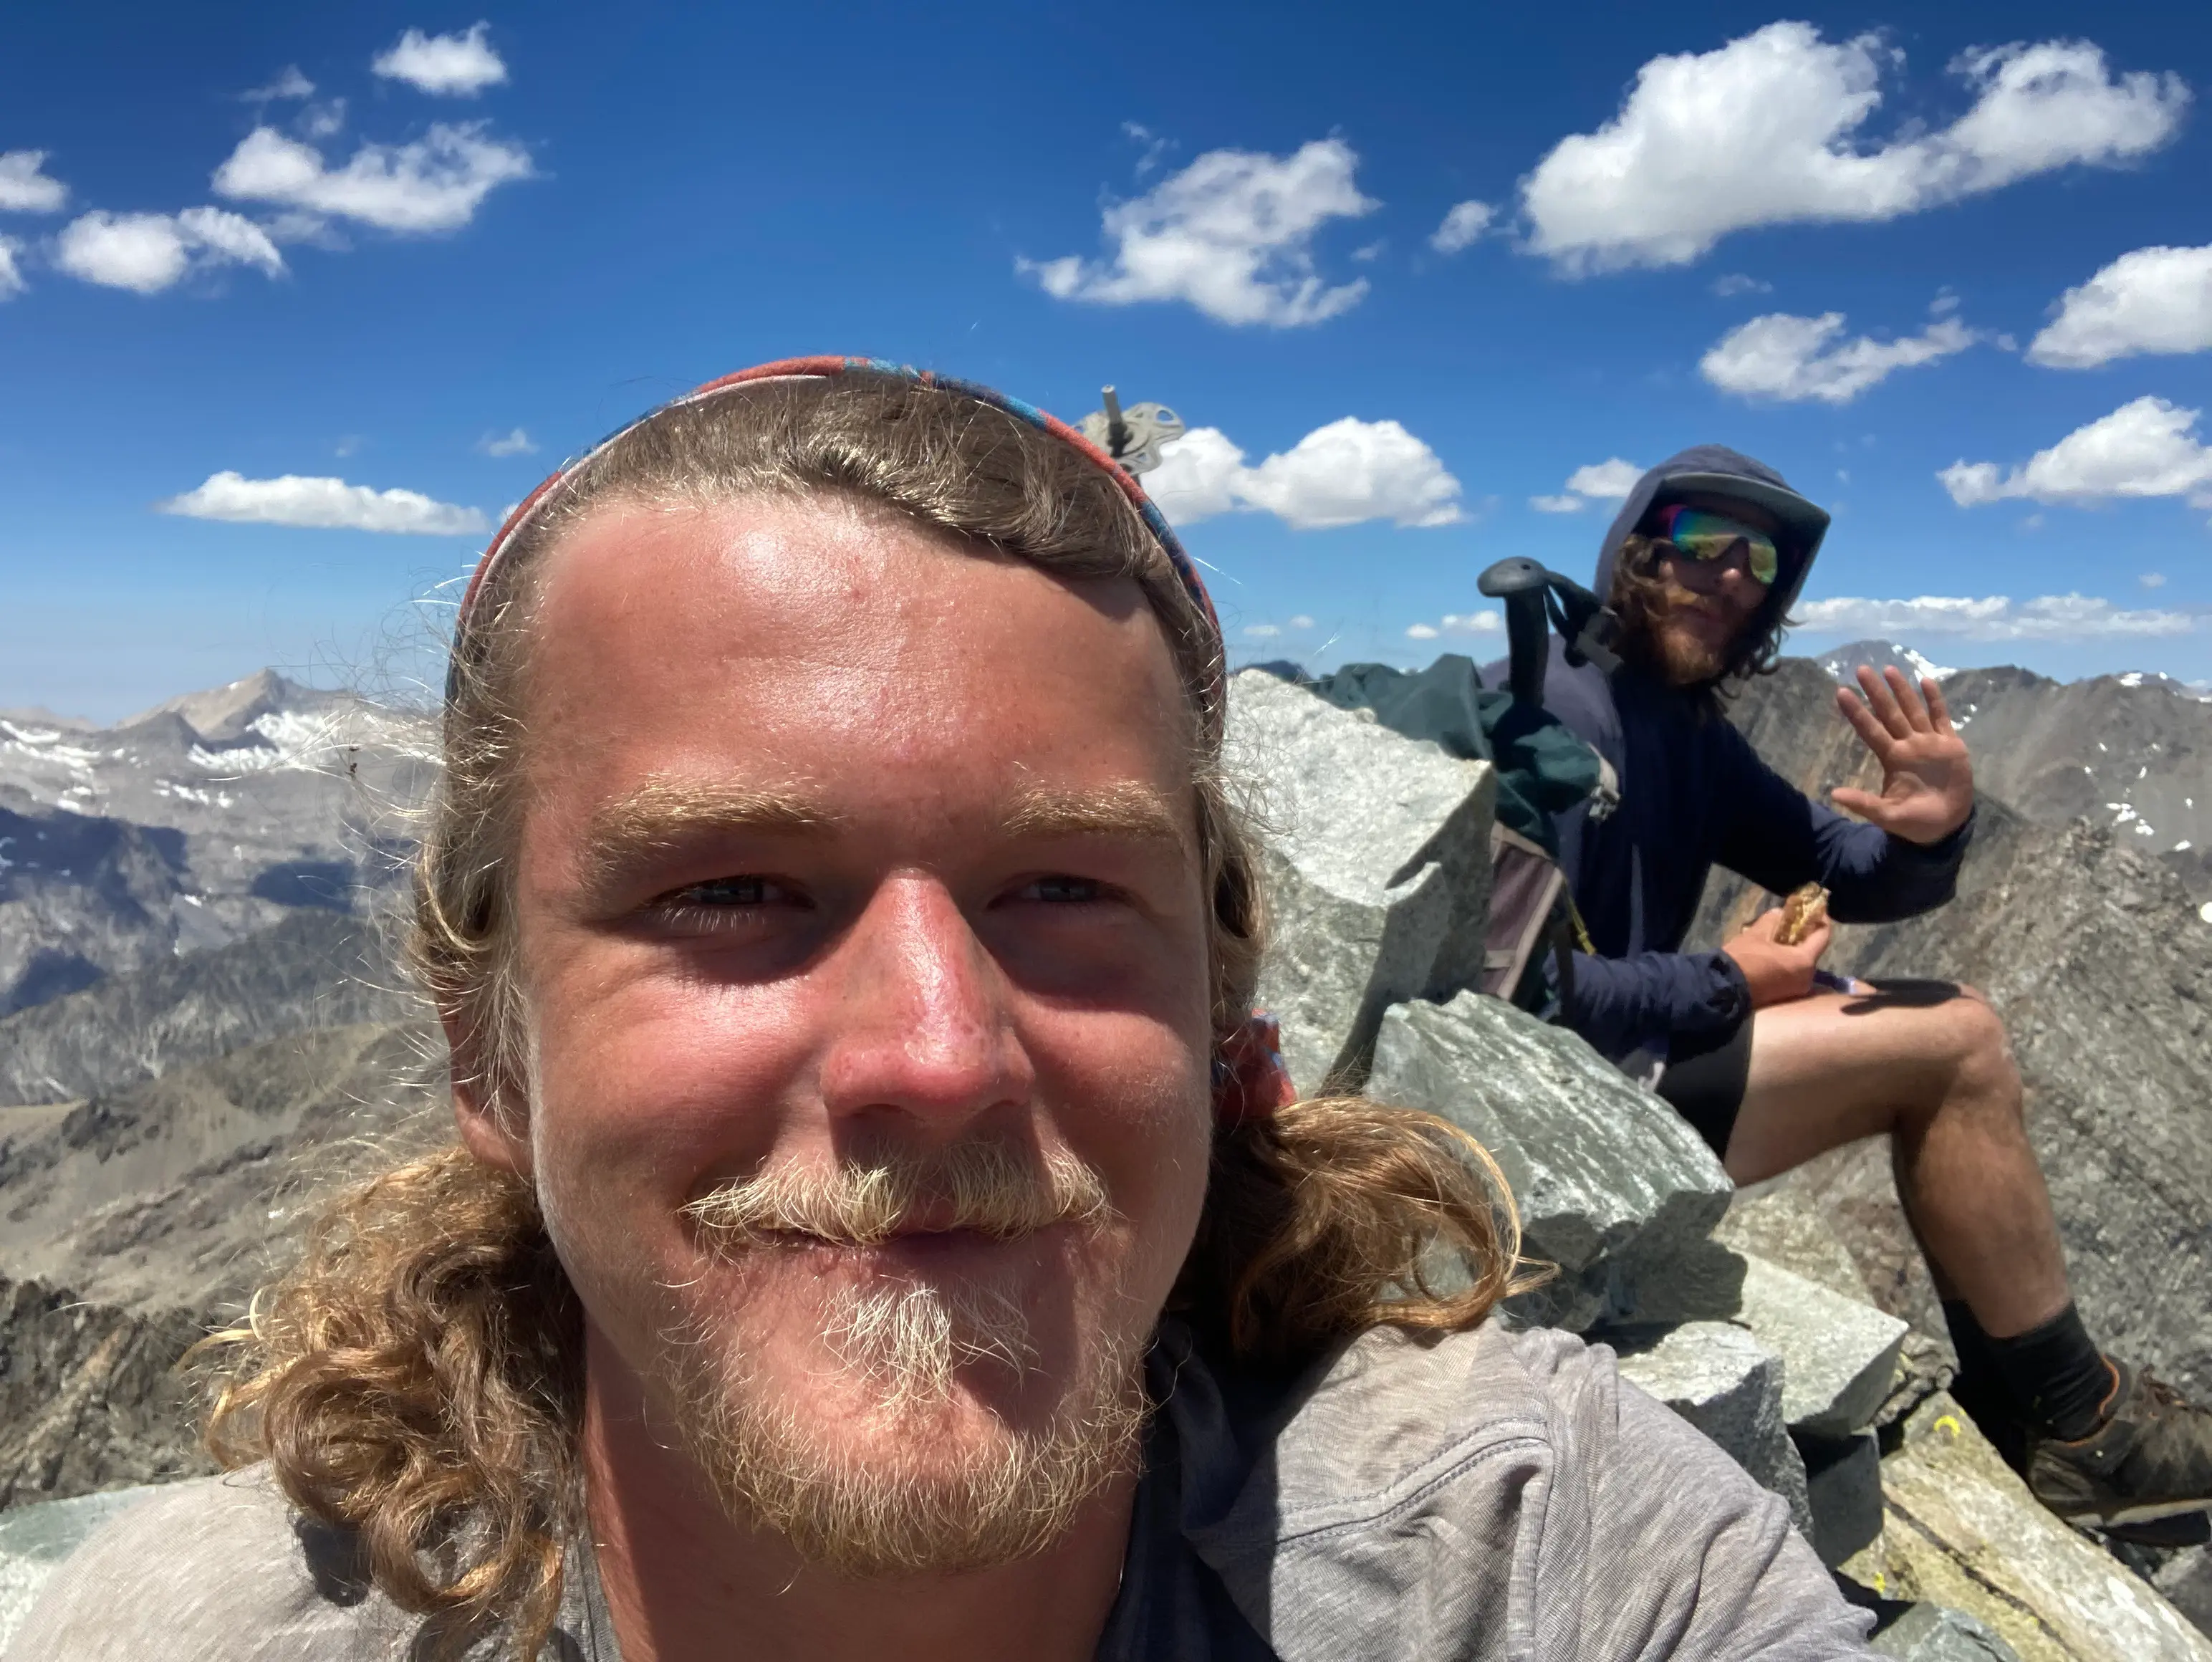 Devils Crags summit